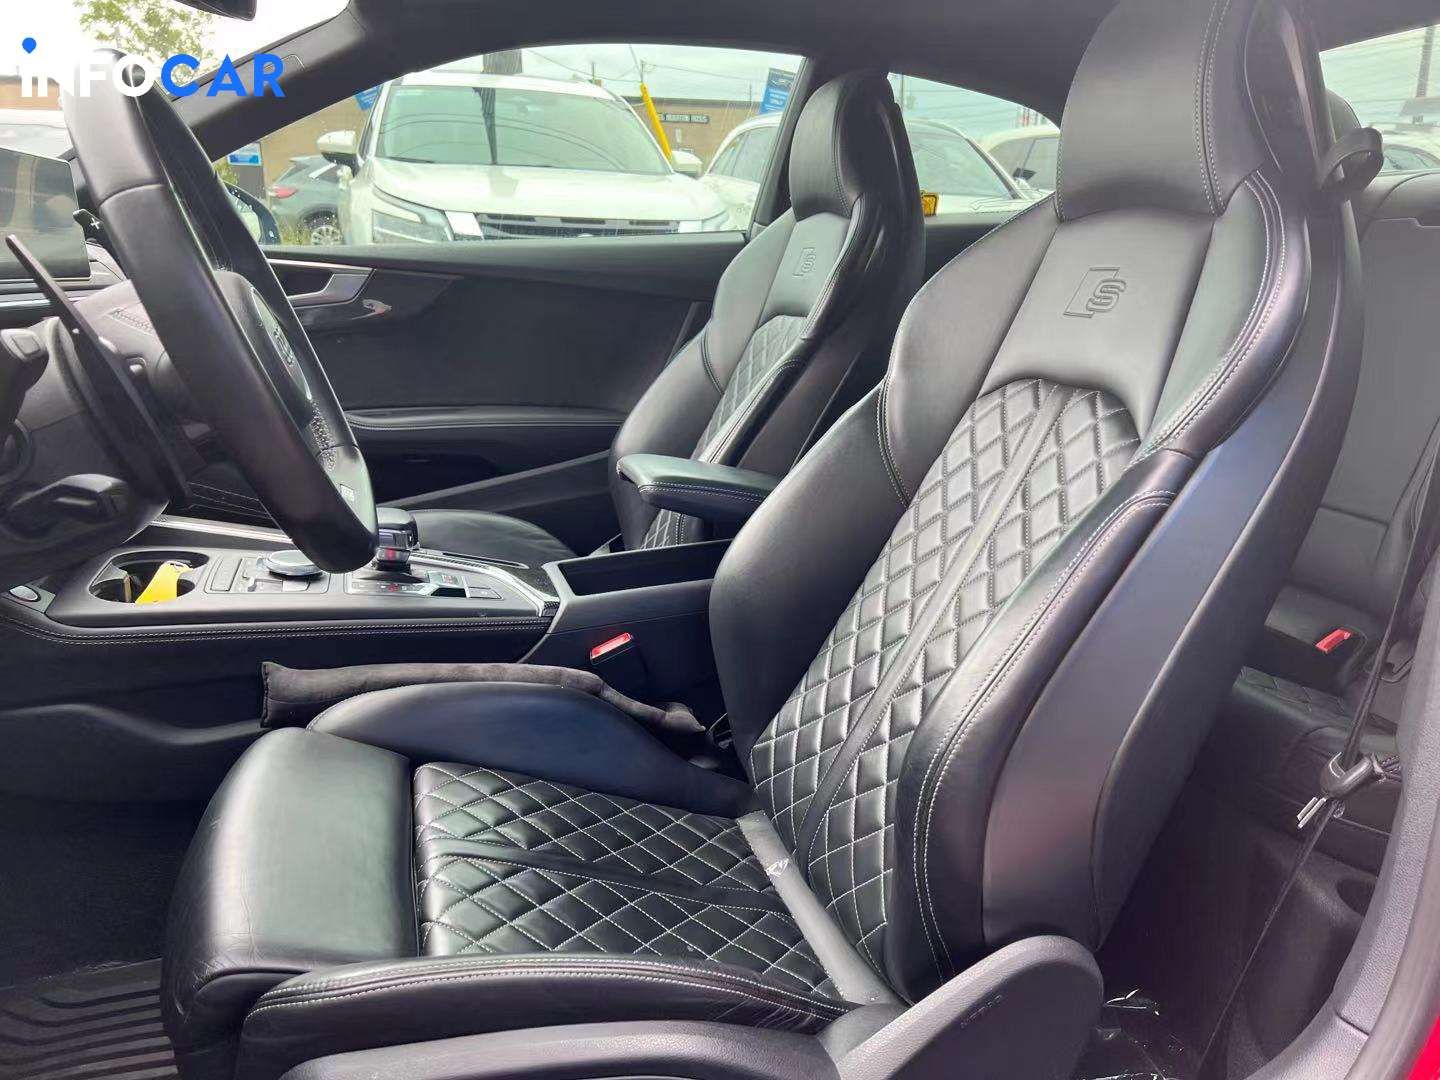 2018 Audi S5 Coupe - INFOCAR - Toronto Auto Trading Platform